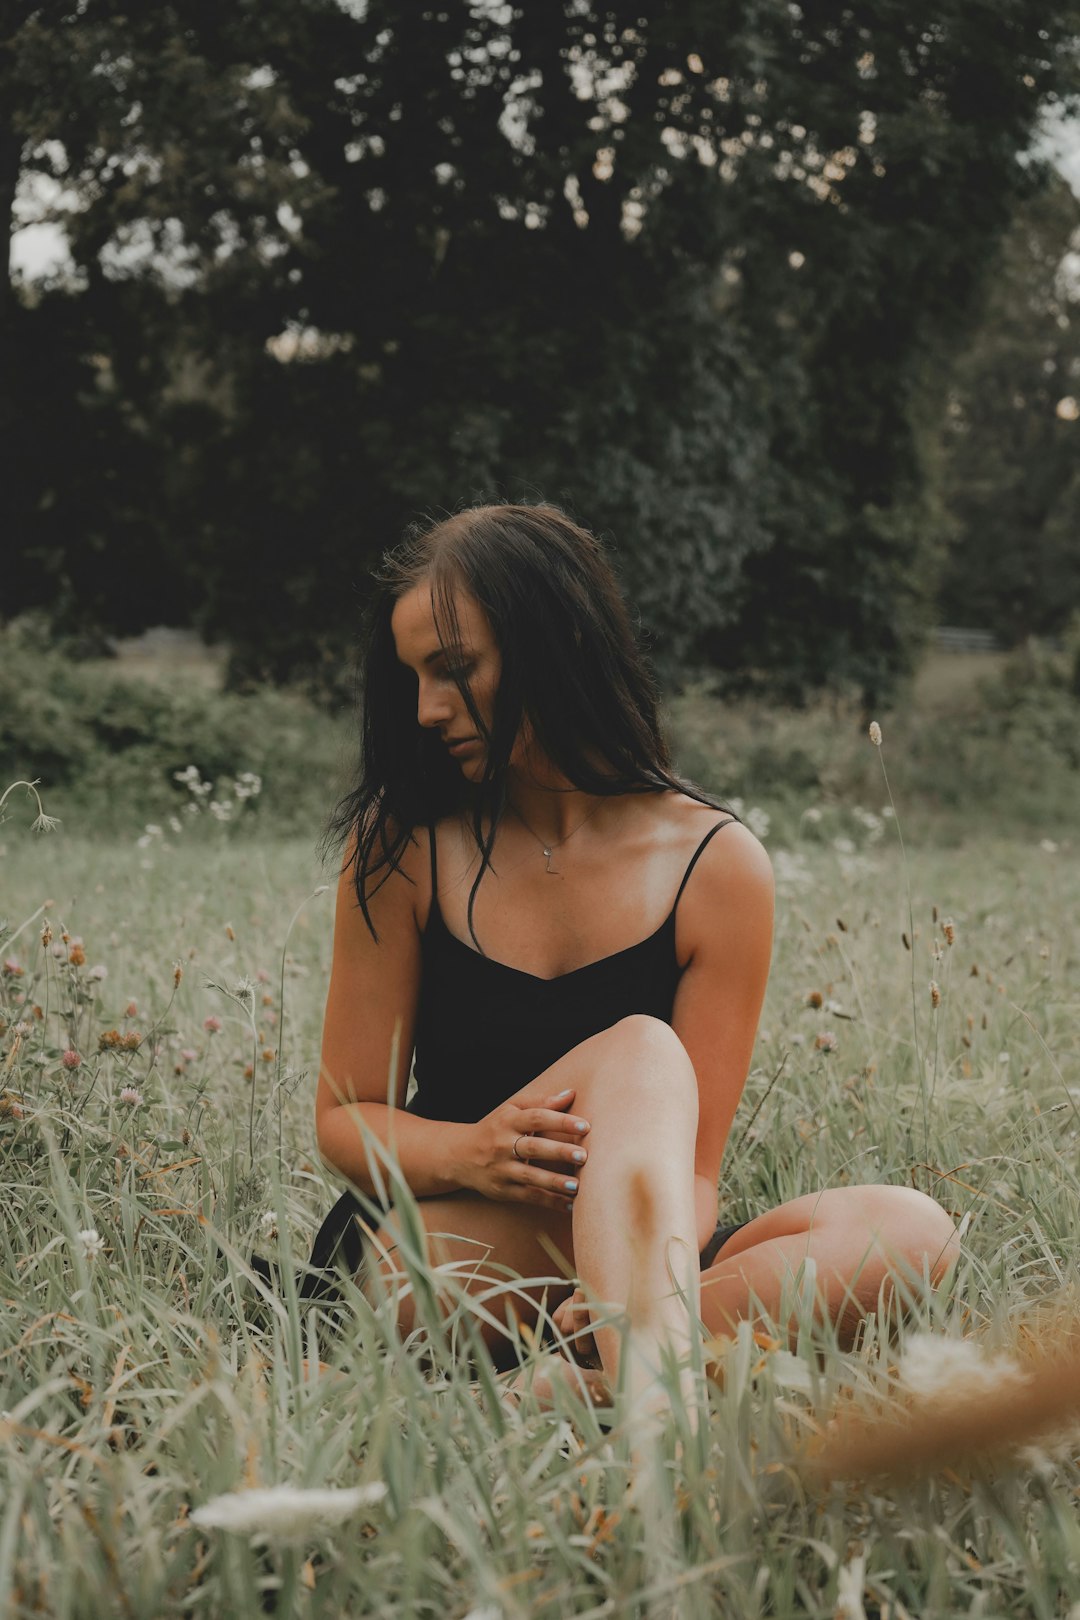 woman in black bikini sitting on grass field during daytime